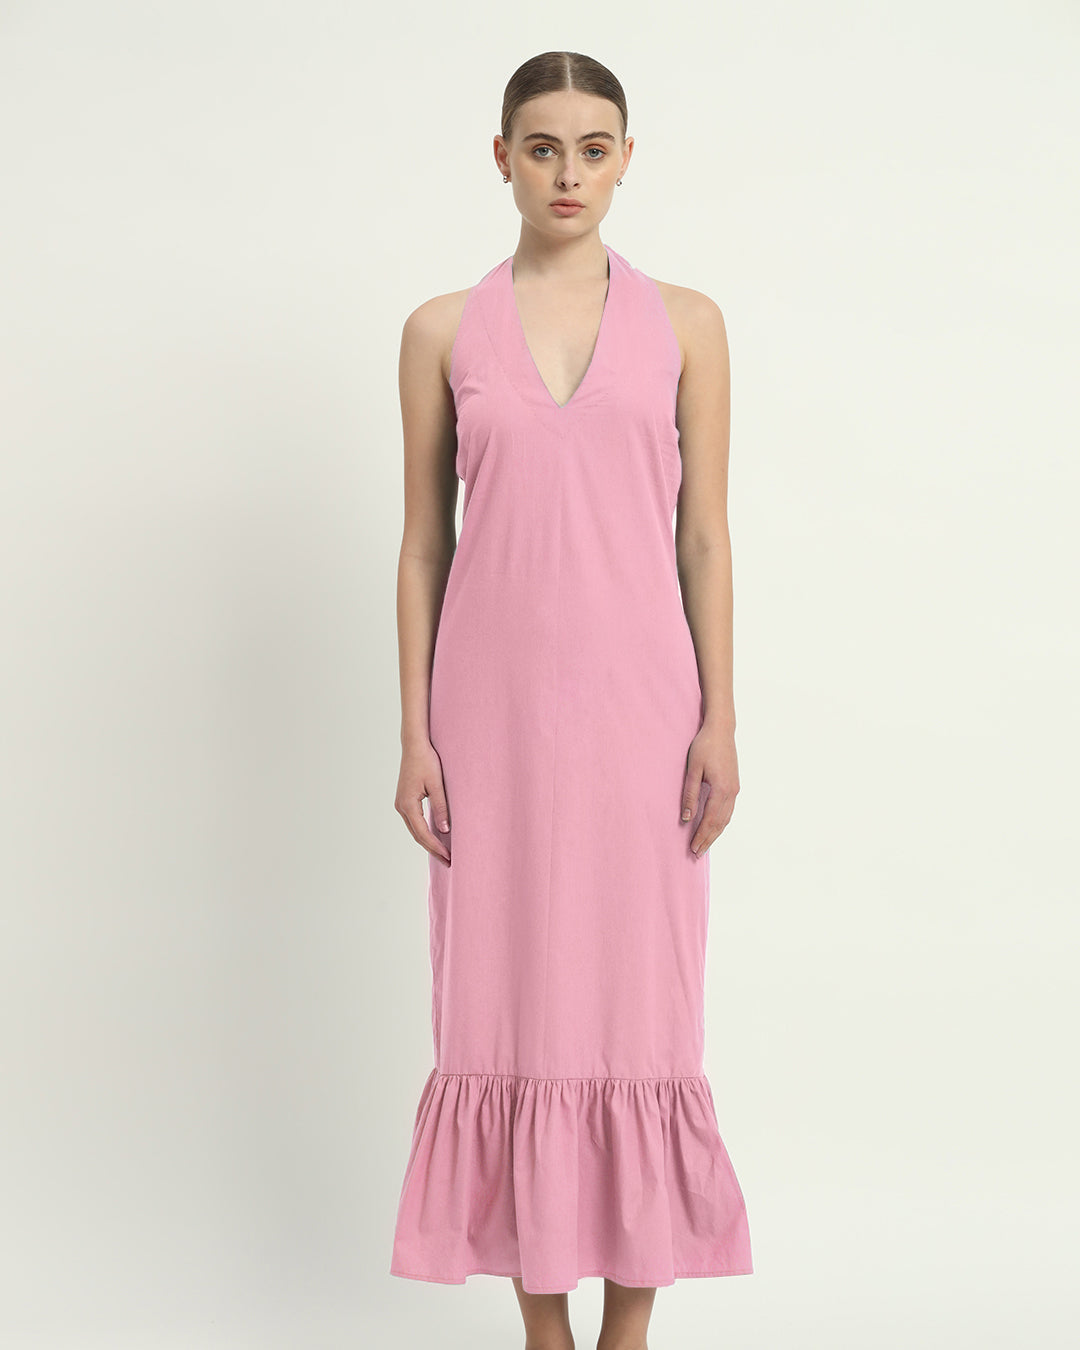 The Fondant Pink Wellsville Cotton Dress